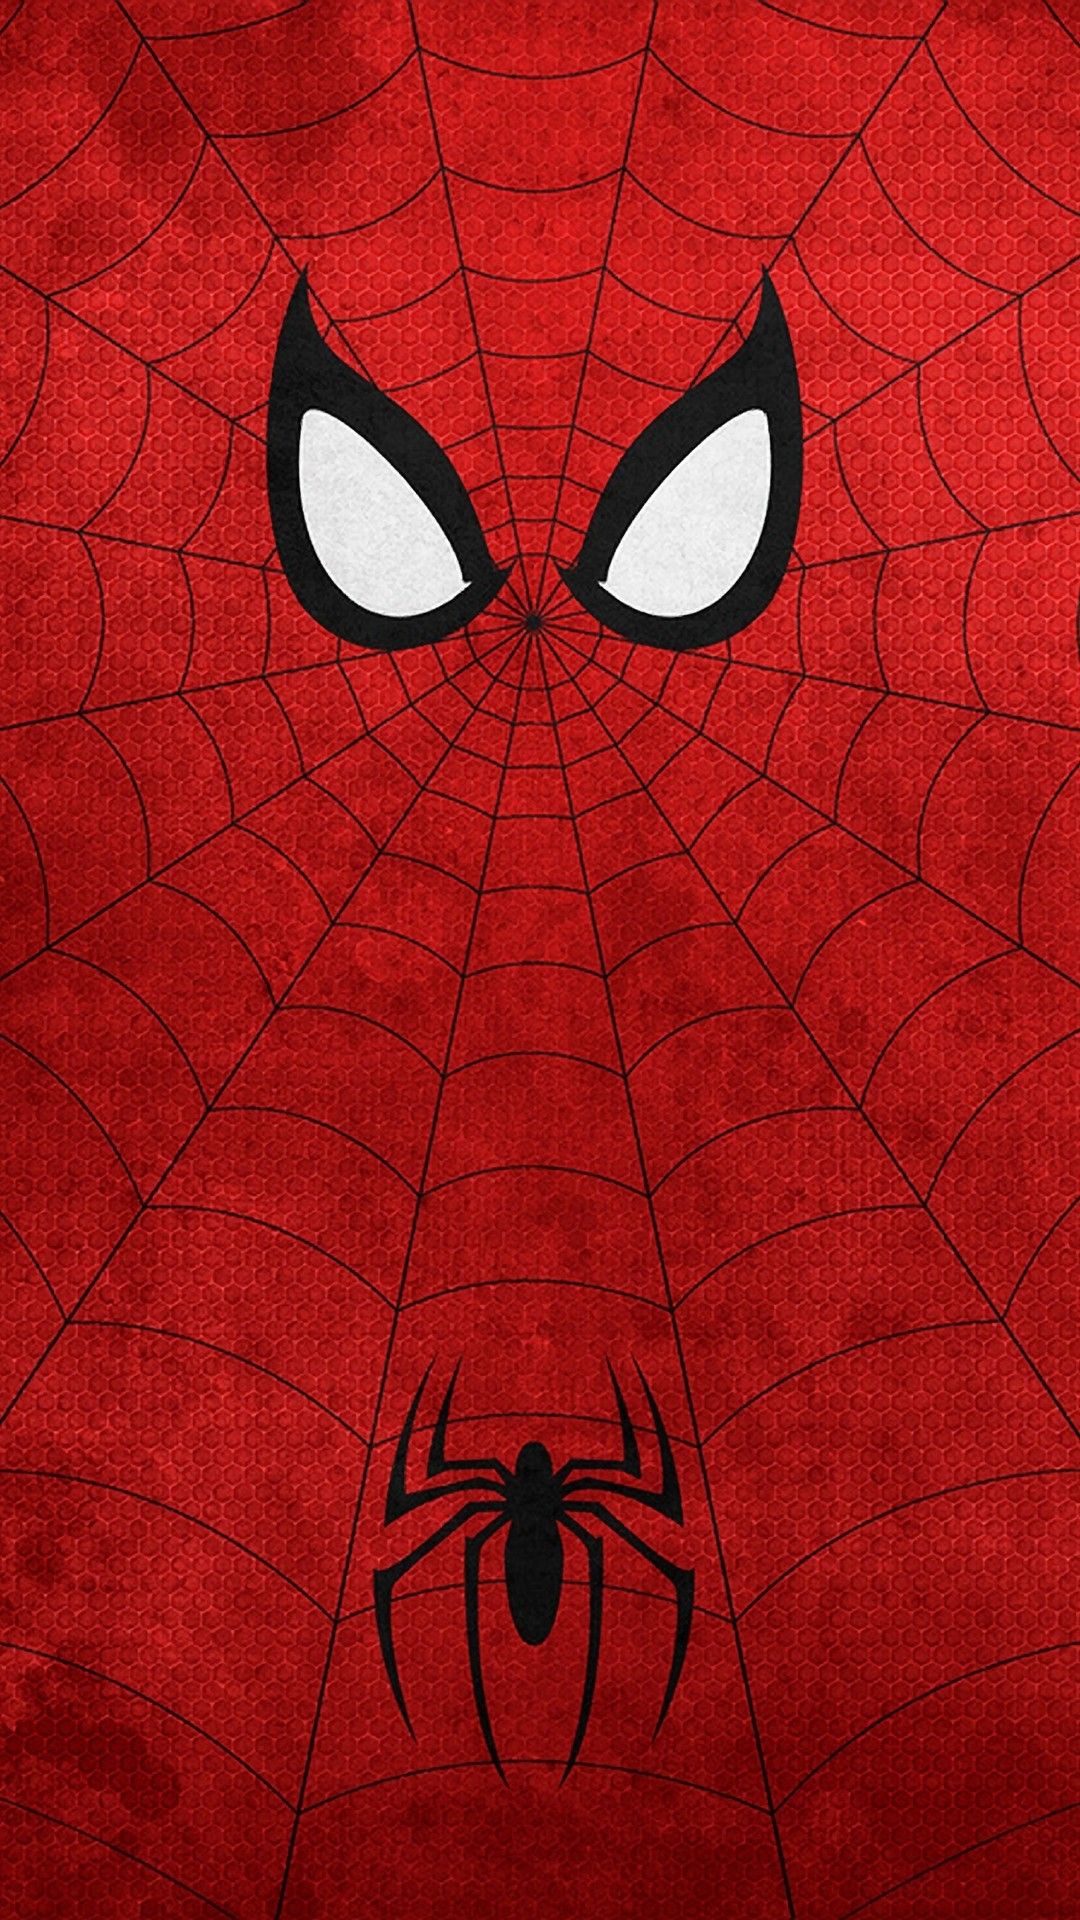 Spiderman iPhone Wallpaper Free Spiderman iPhone Background